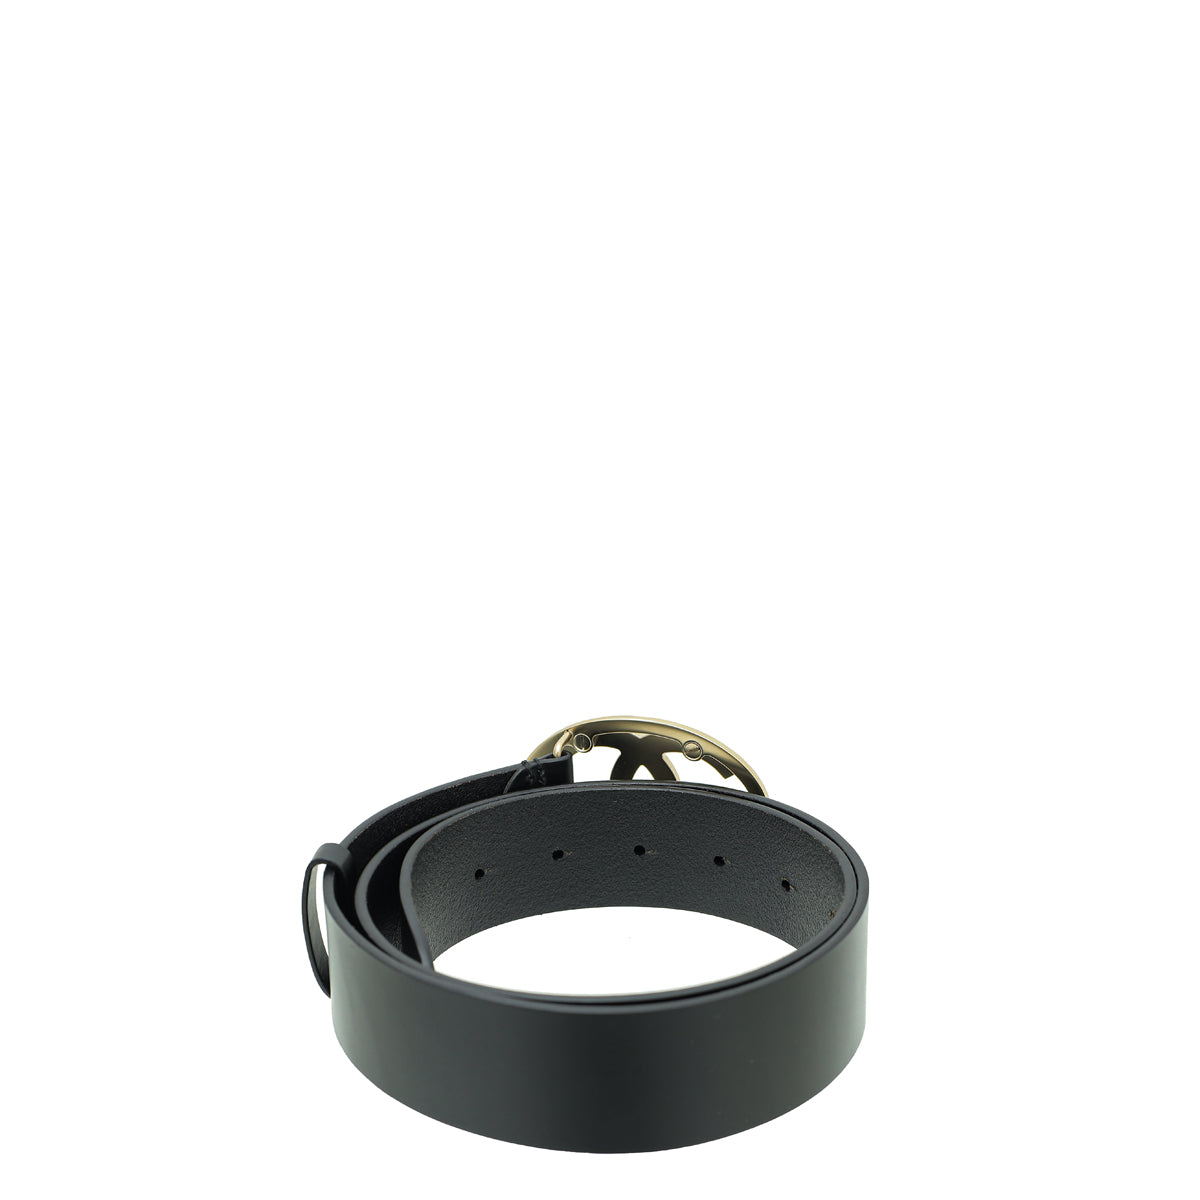 Chanel Black CC Oval Buckle Belt 34